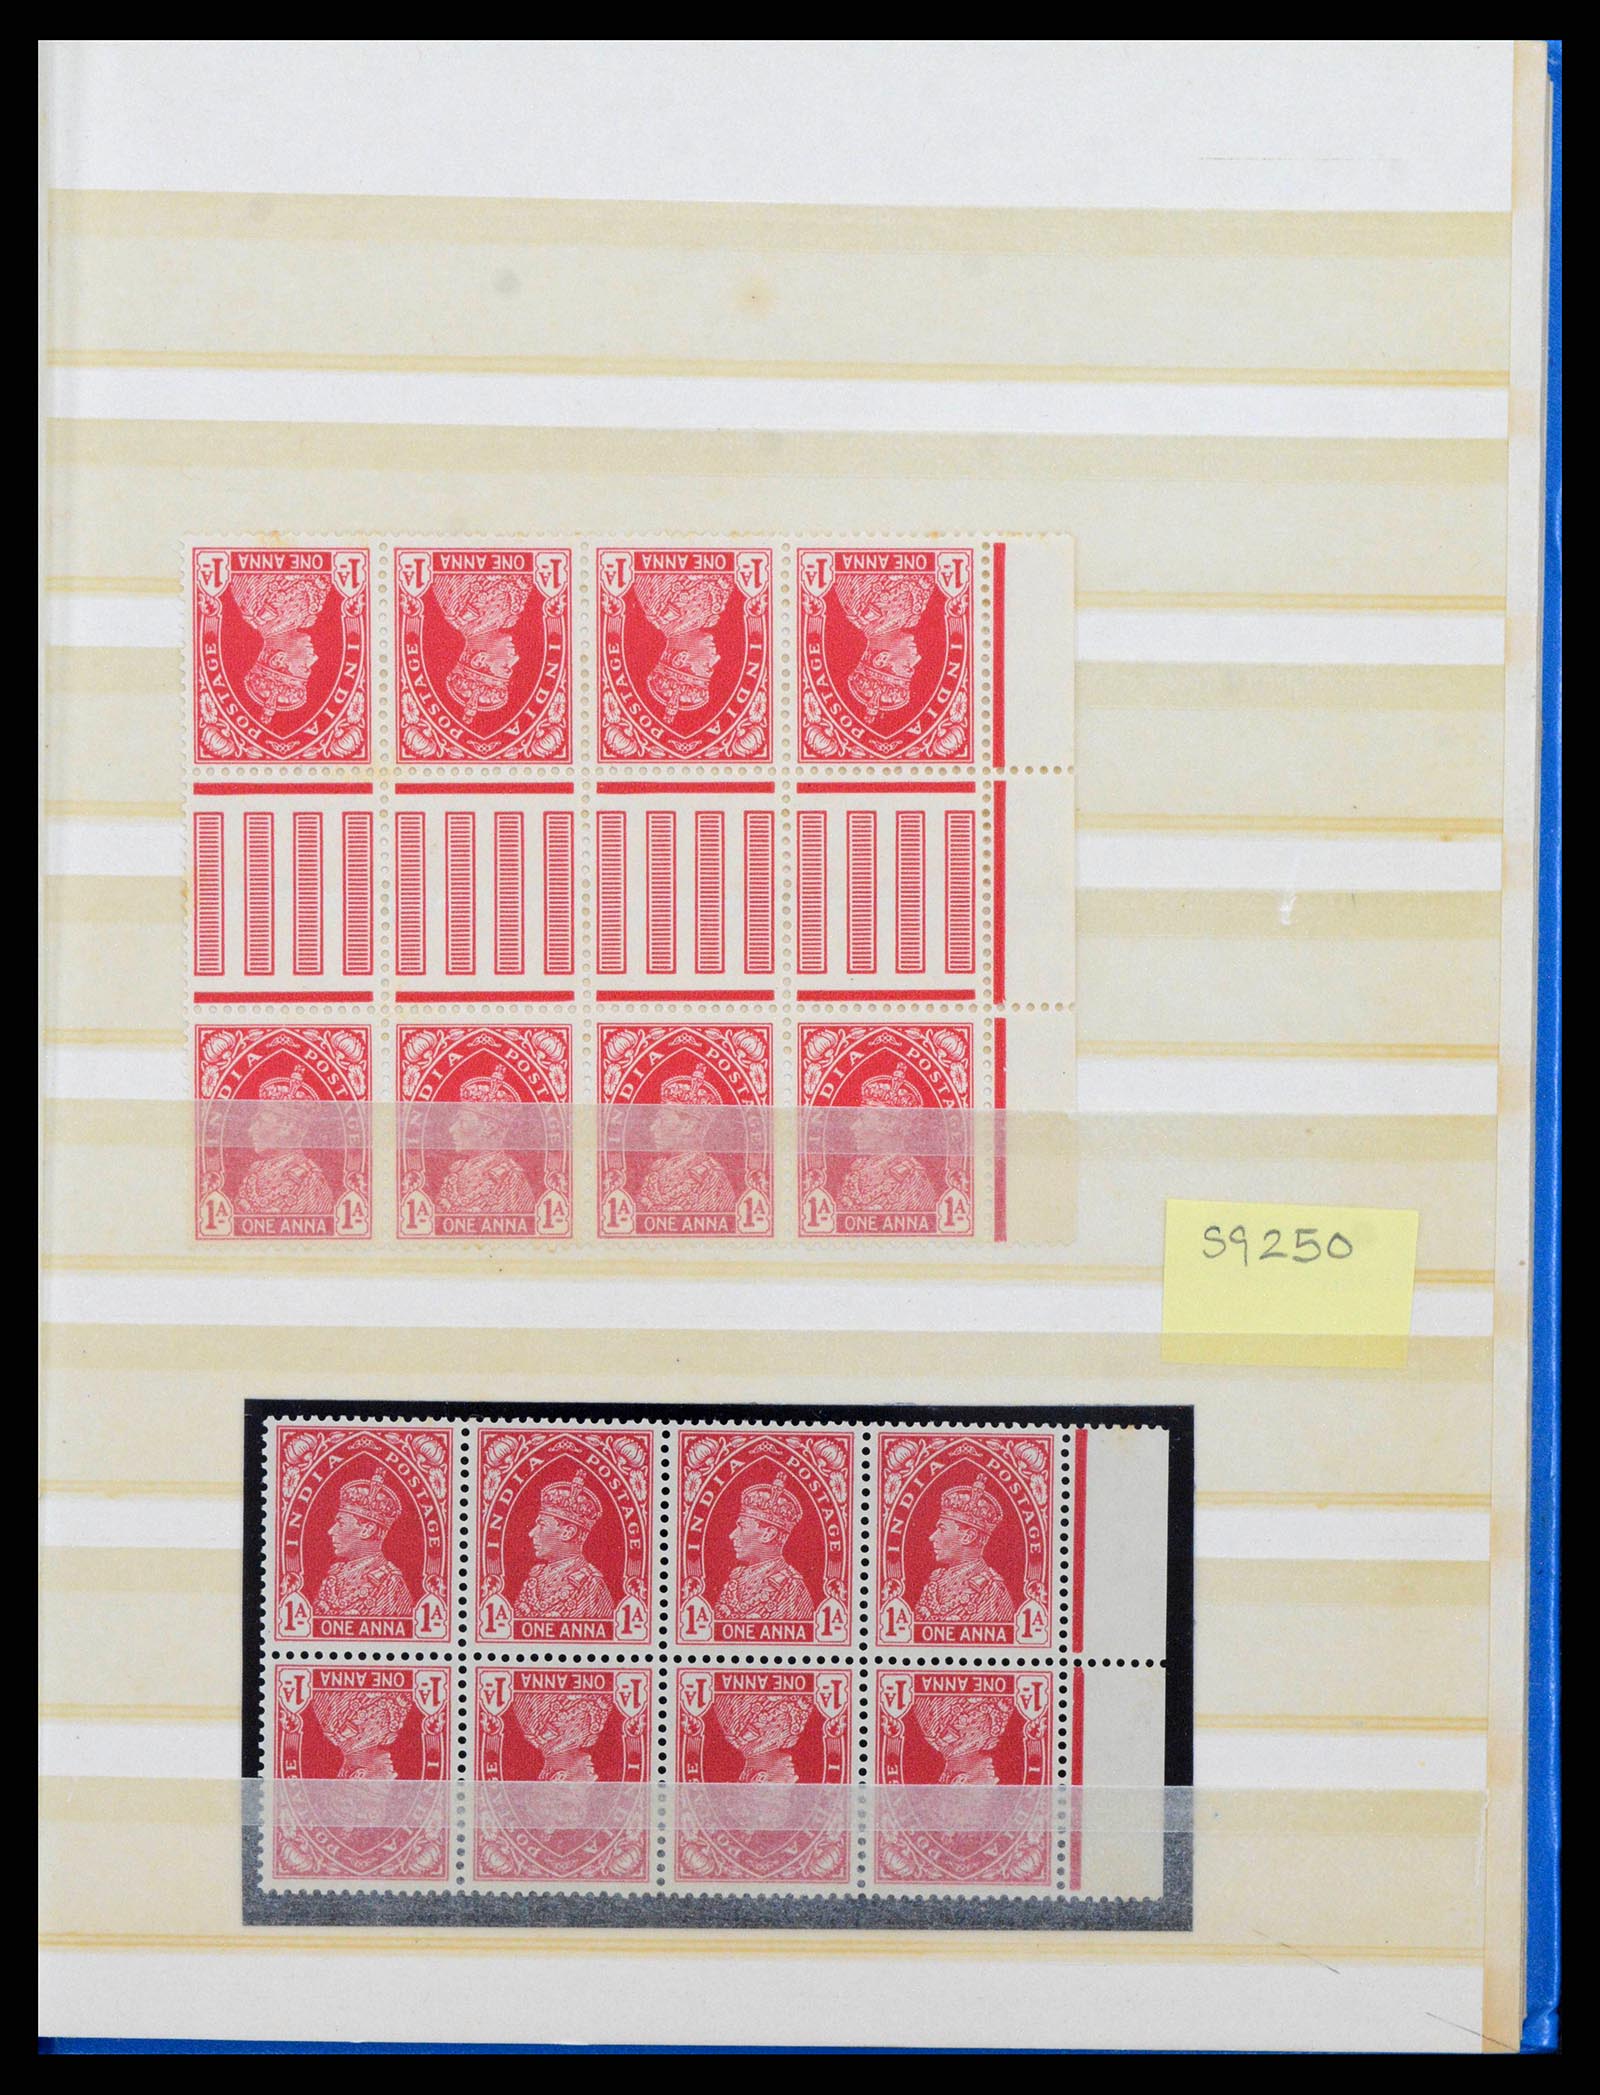 38318 0007 - Stamp collection 38318 British Commonwealth varieties 1900-1965.